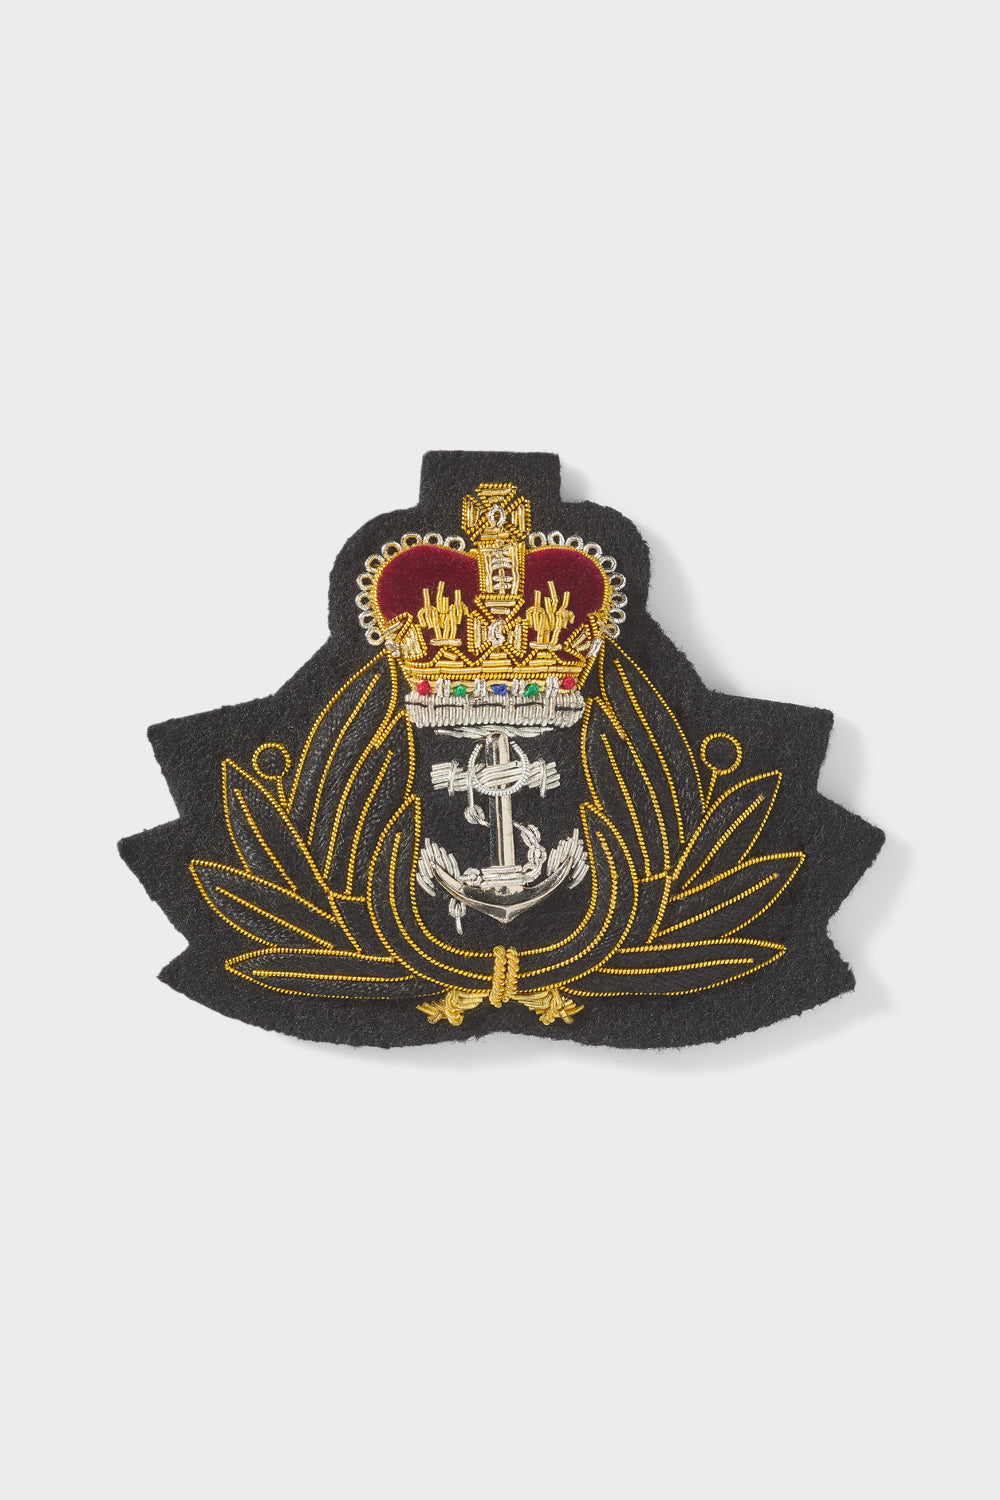 Royal Navy Chaplains Cap Badge